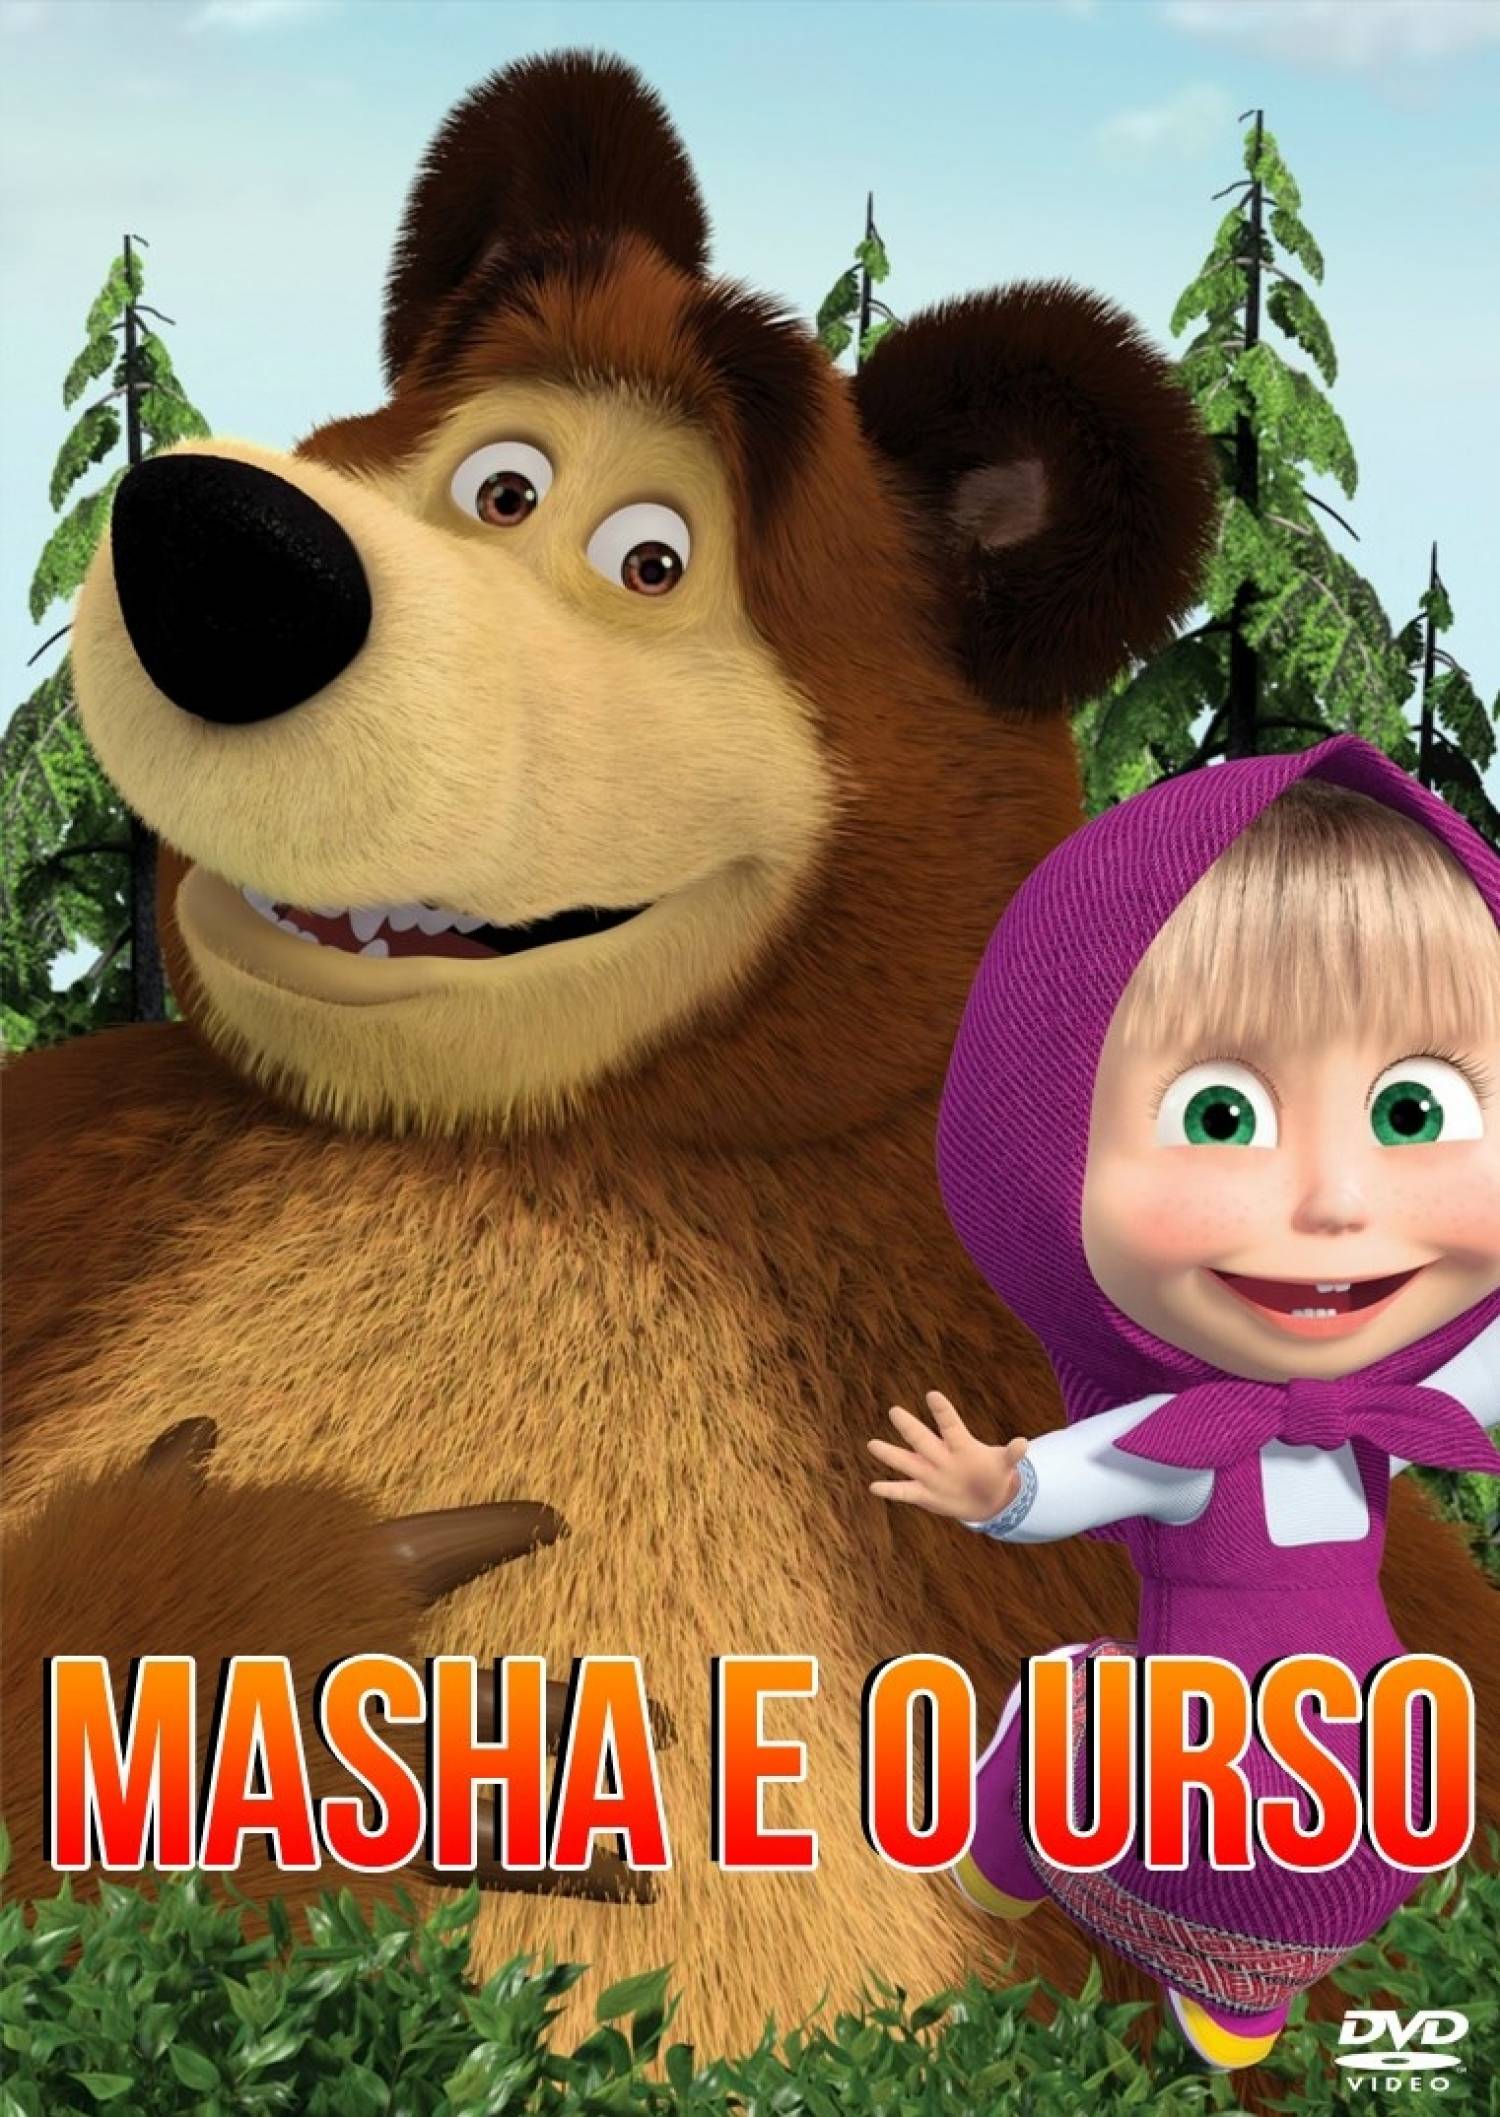  O Filme Masha e O Urso - Silvia Abravanel / Maisa